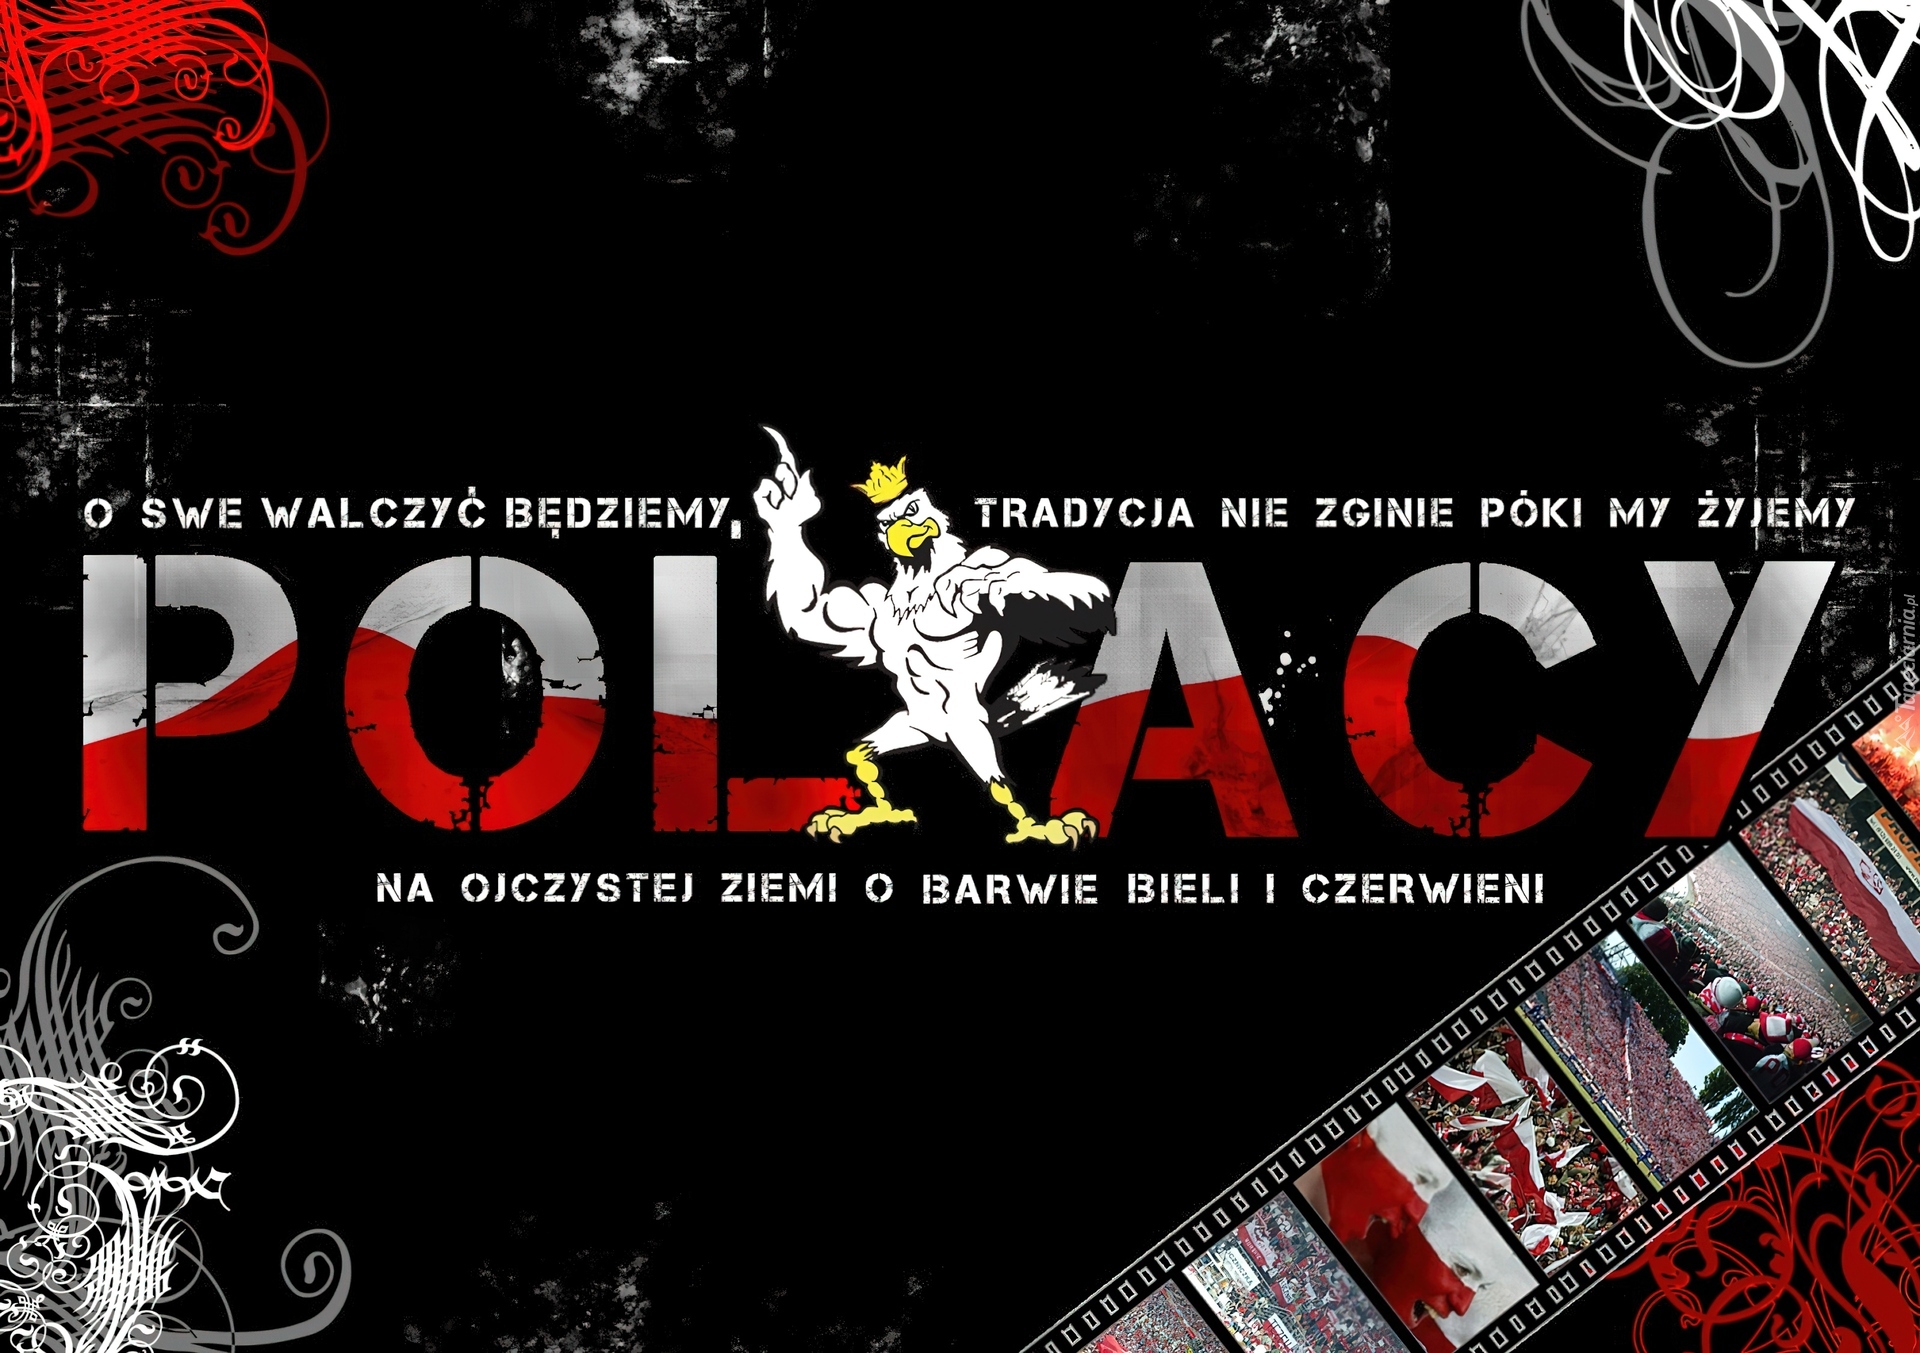 Polacy, Patriot, Kibice